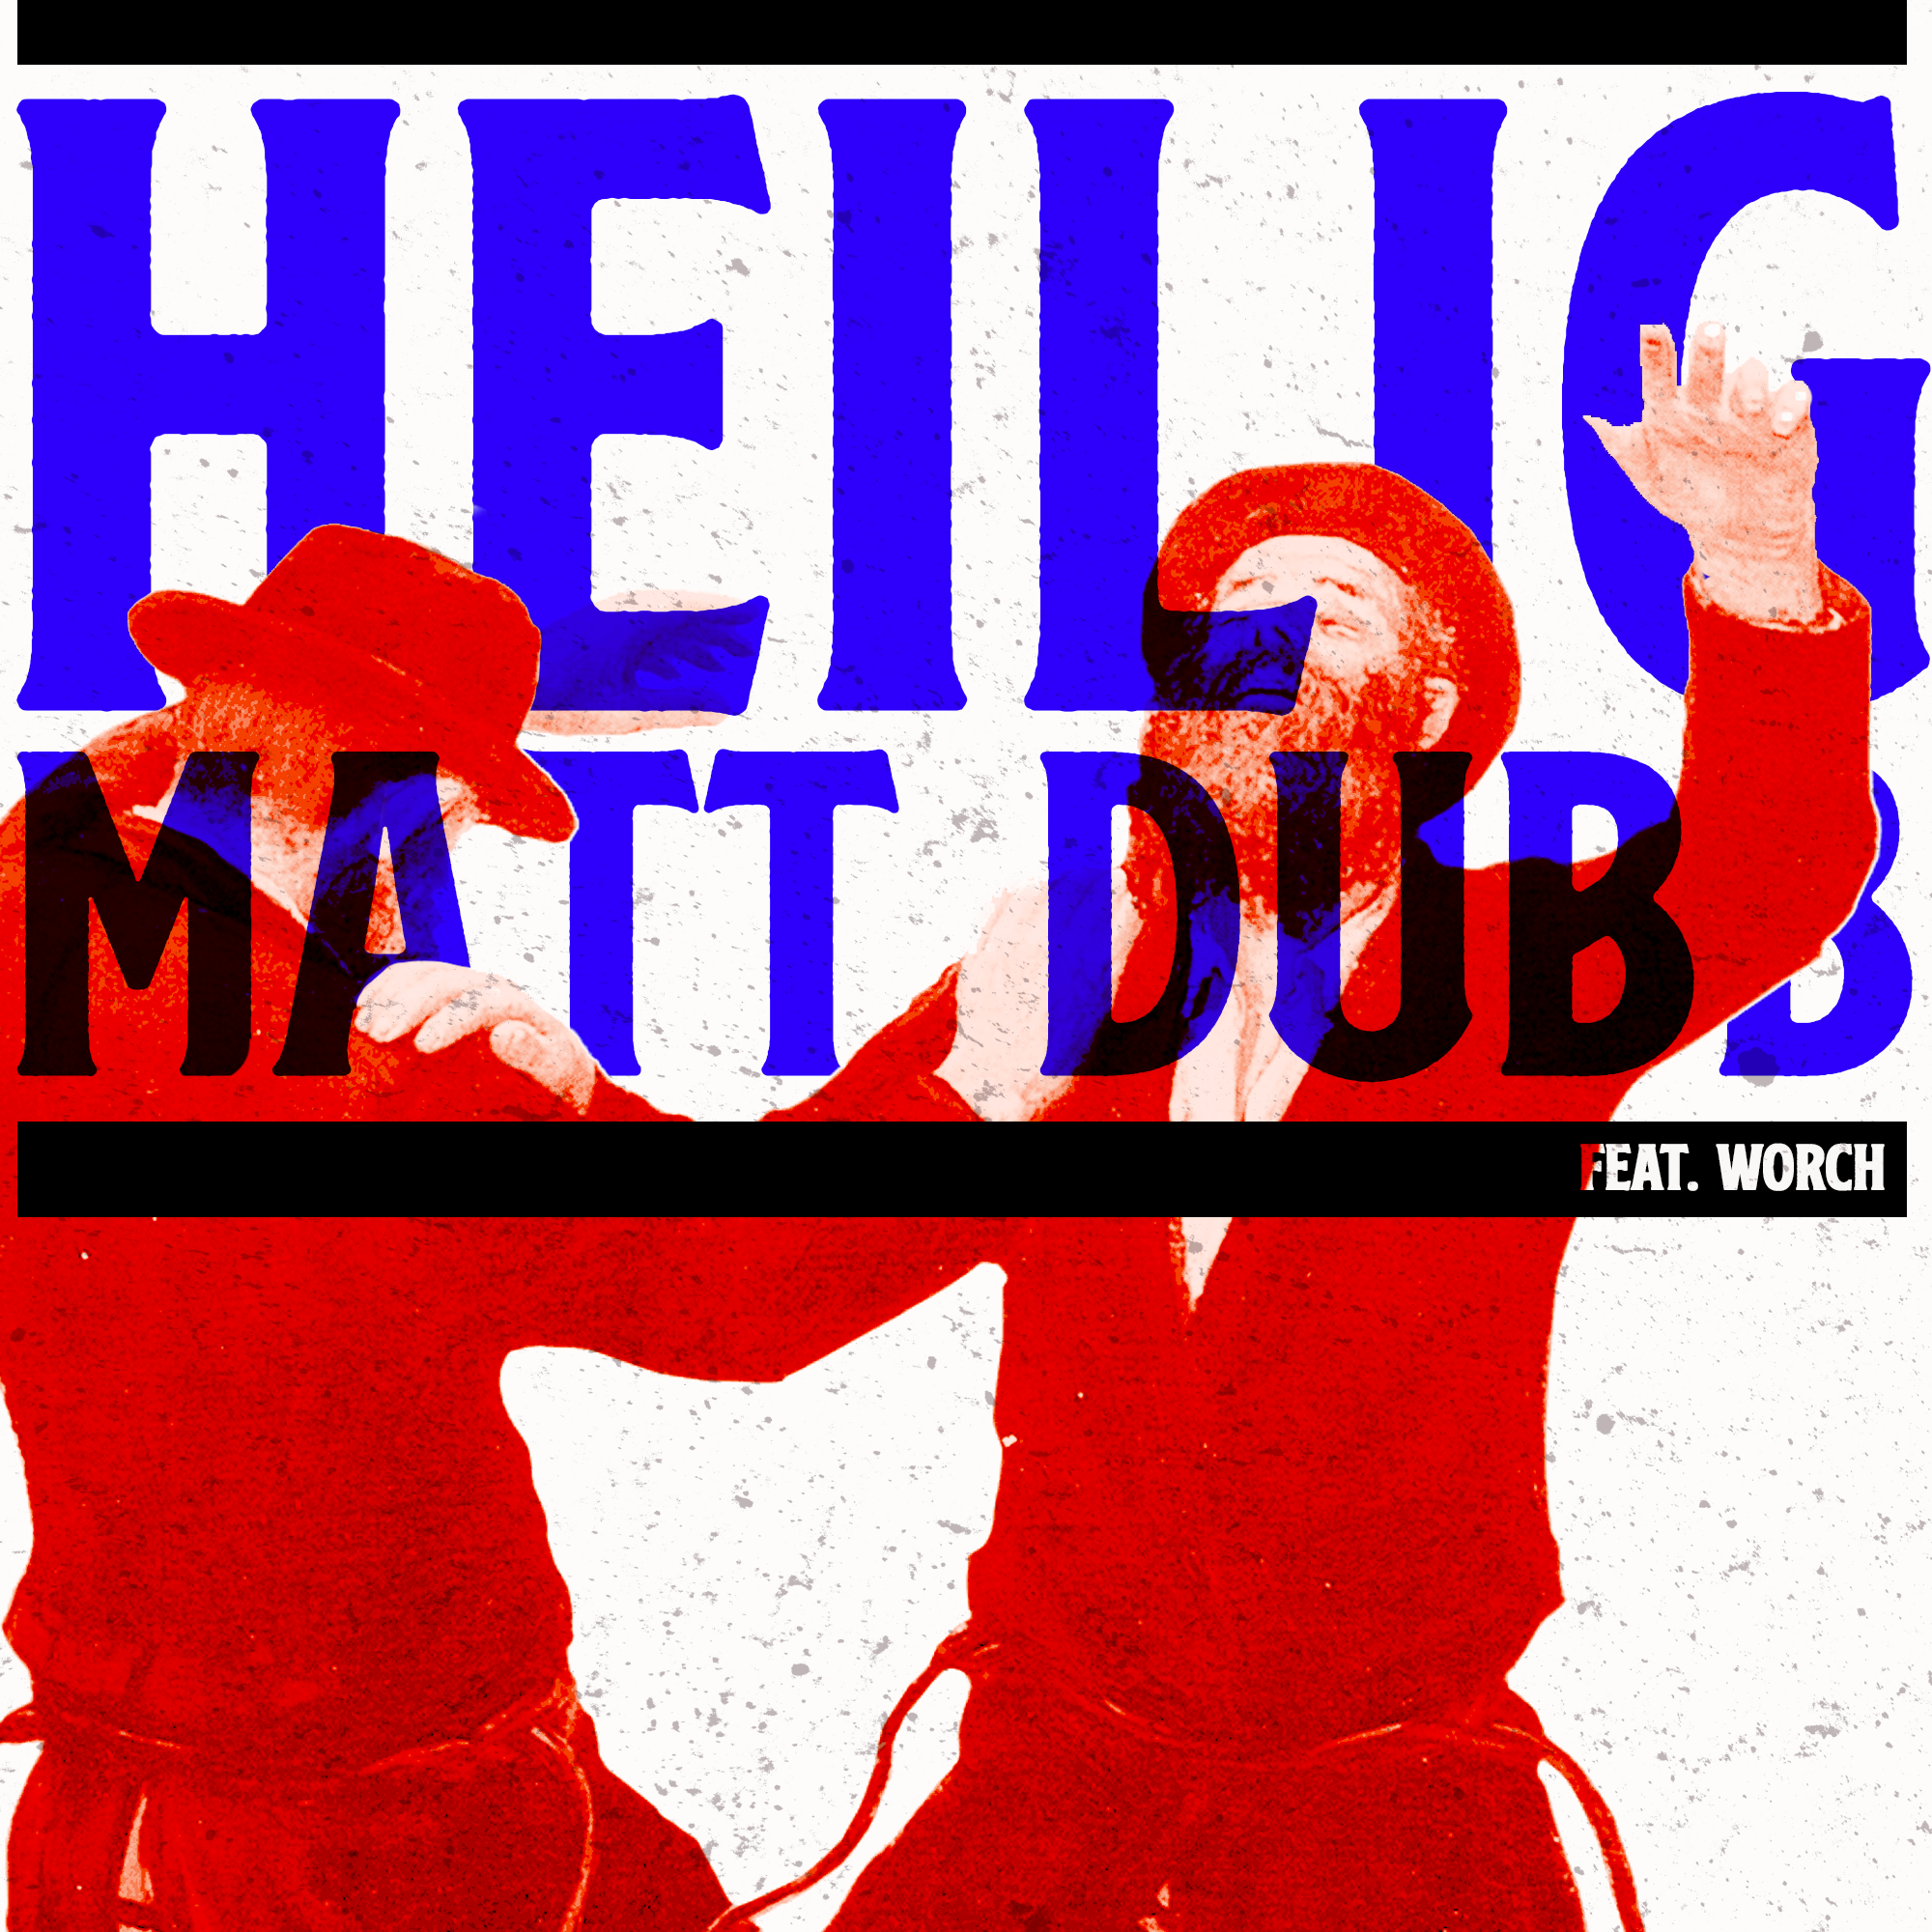 Matt Dubb - Heilig - feat. Worch (Single)